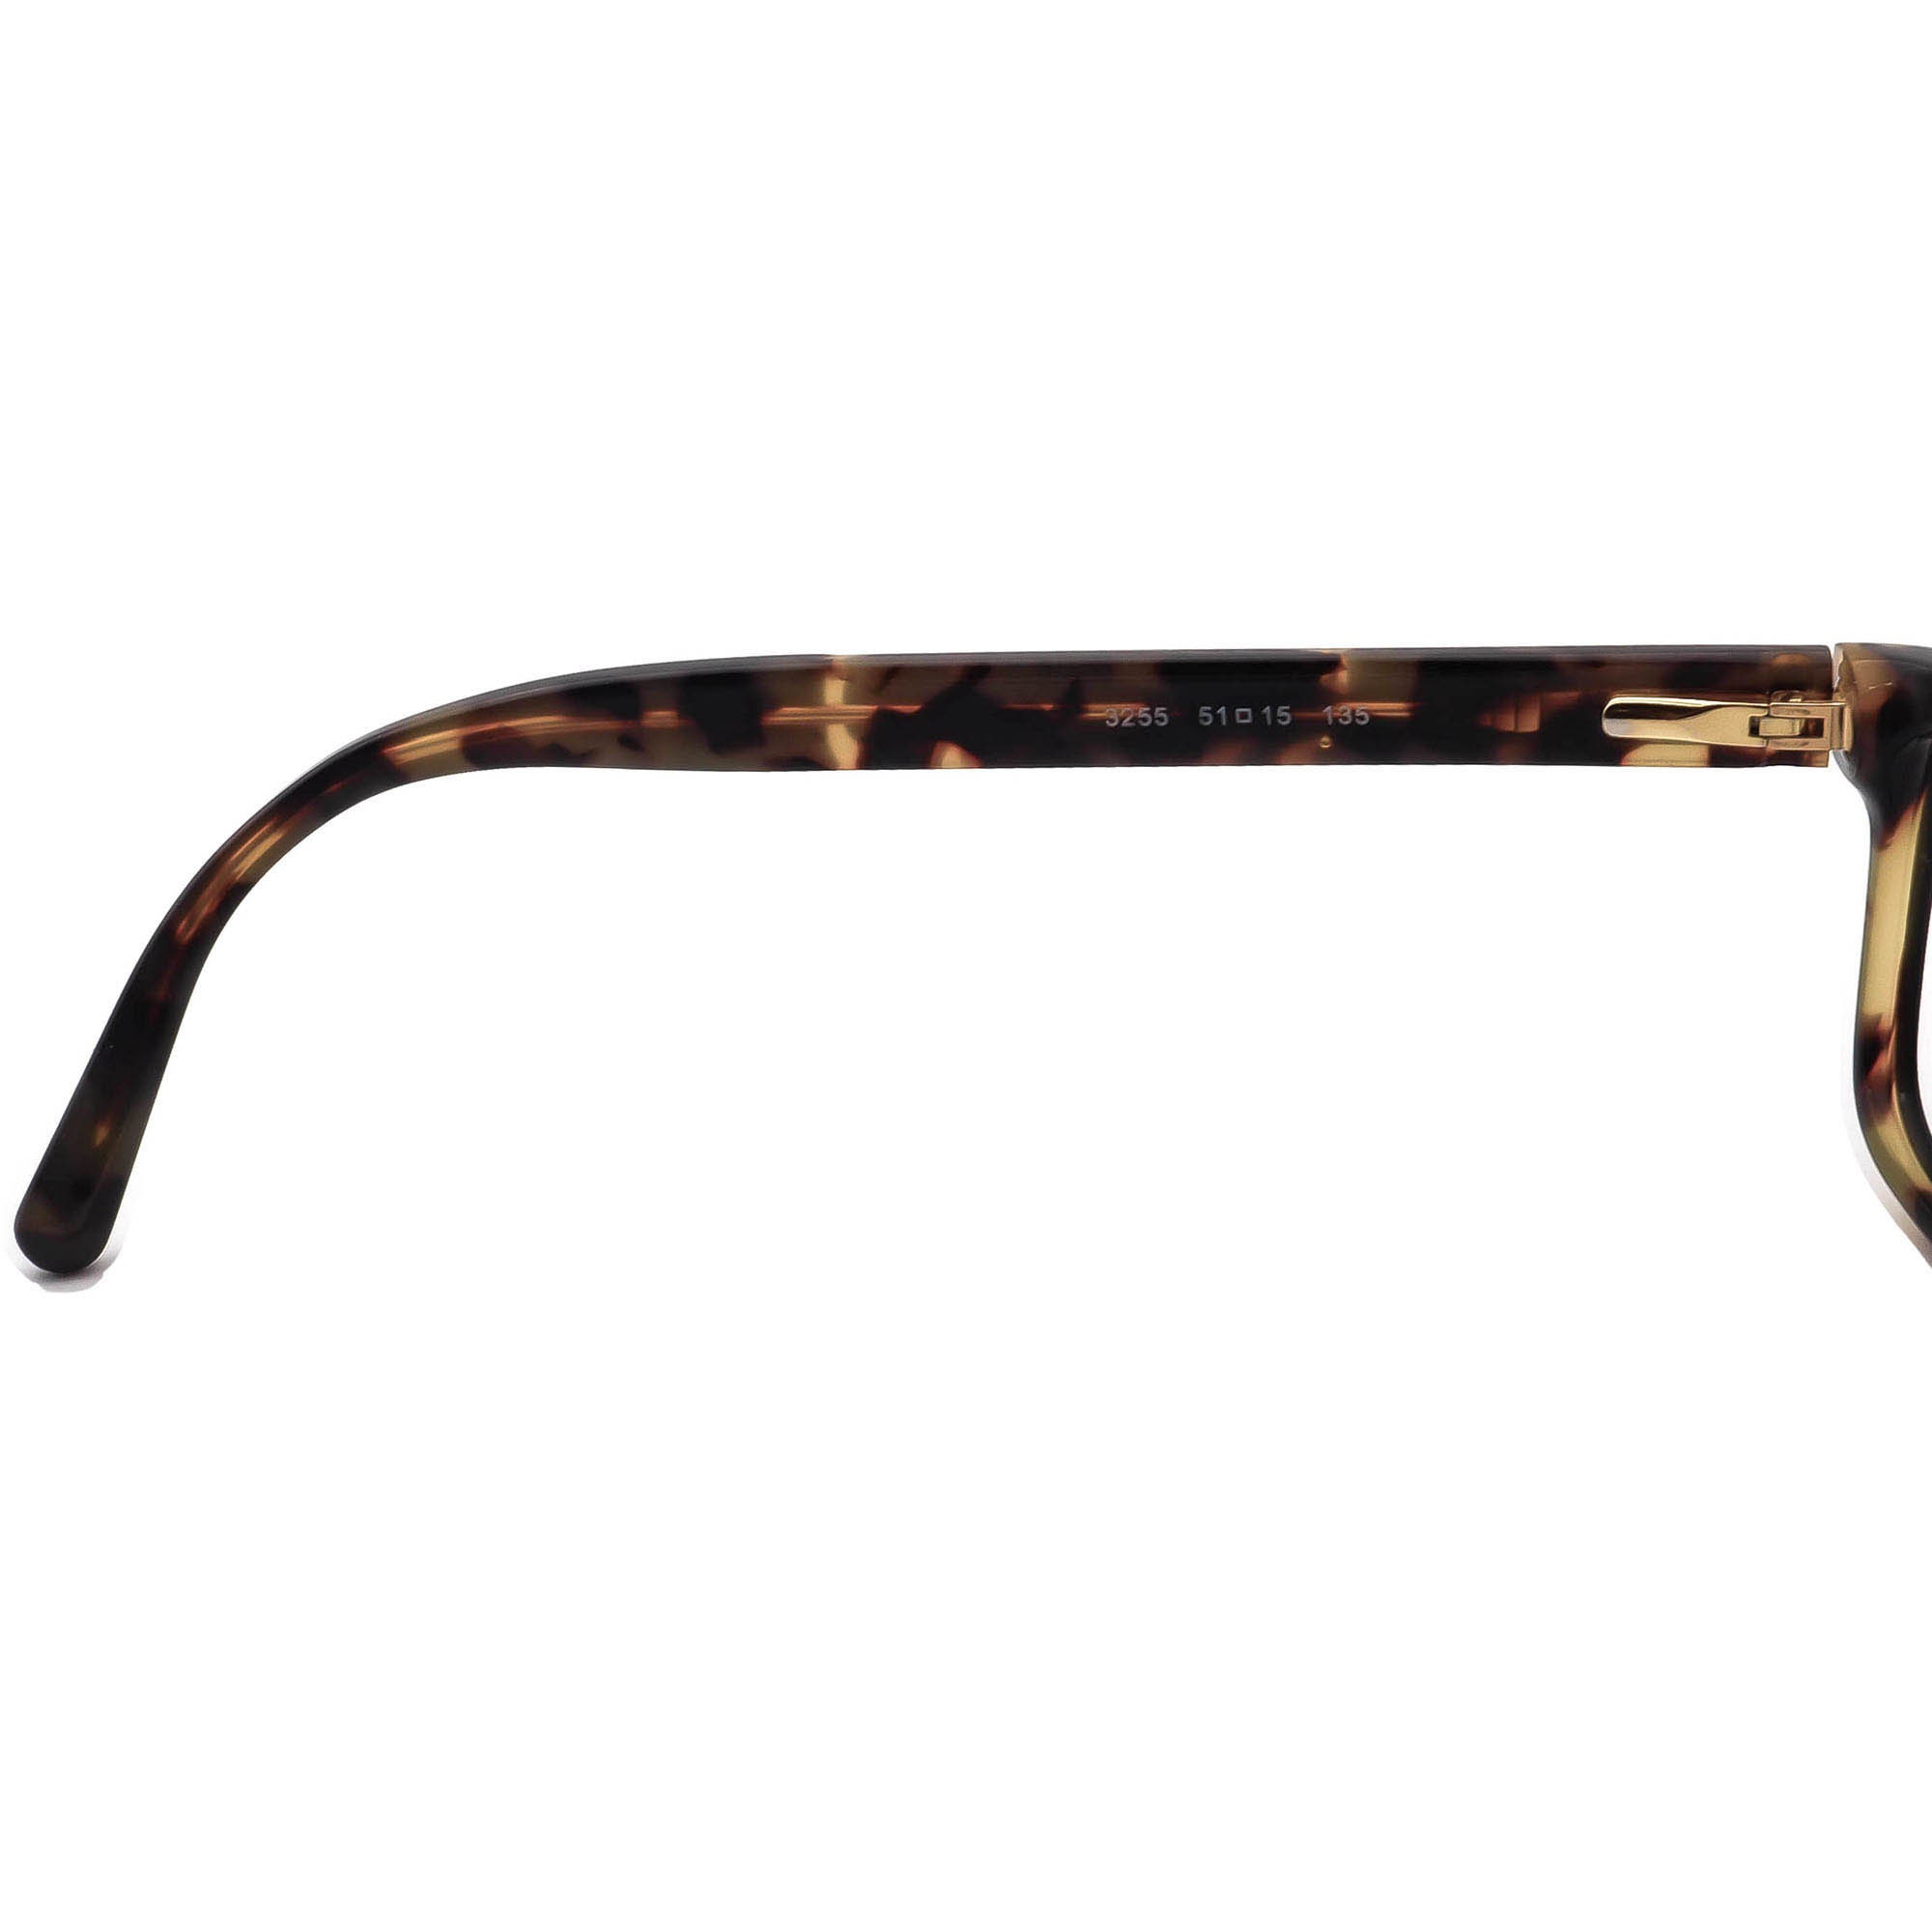 Michael Kors Eyeglasses MK 4043 Kya 3255 Black/Tortoise | Etsy